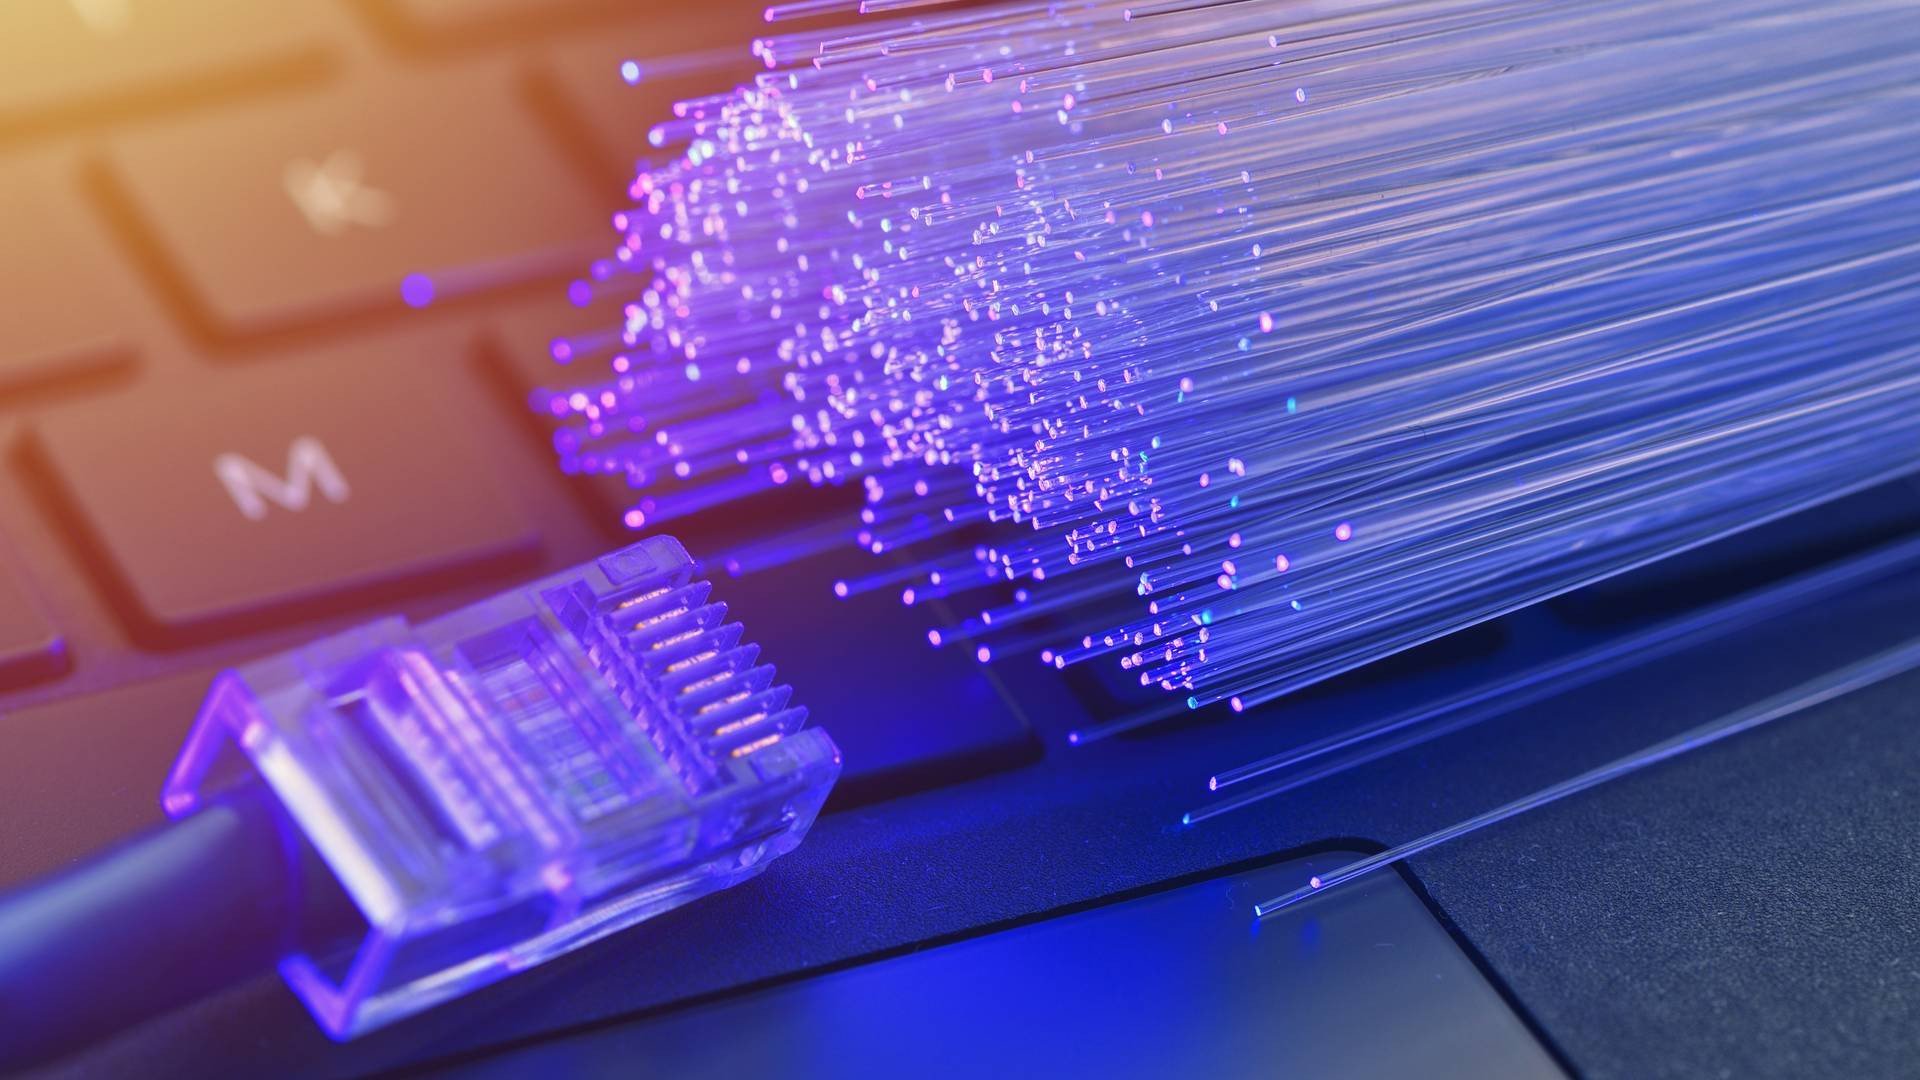 Record breaking fiber transmits 20x global internet traffic per second